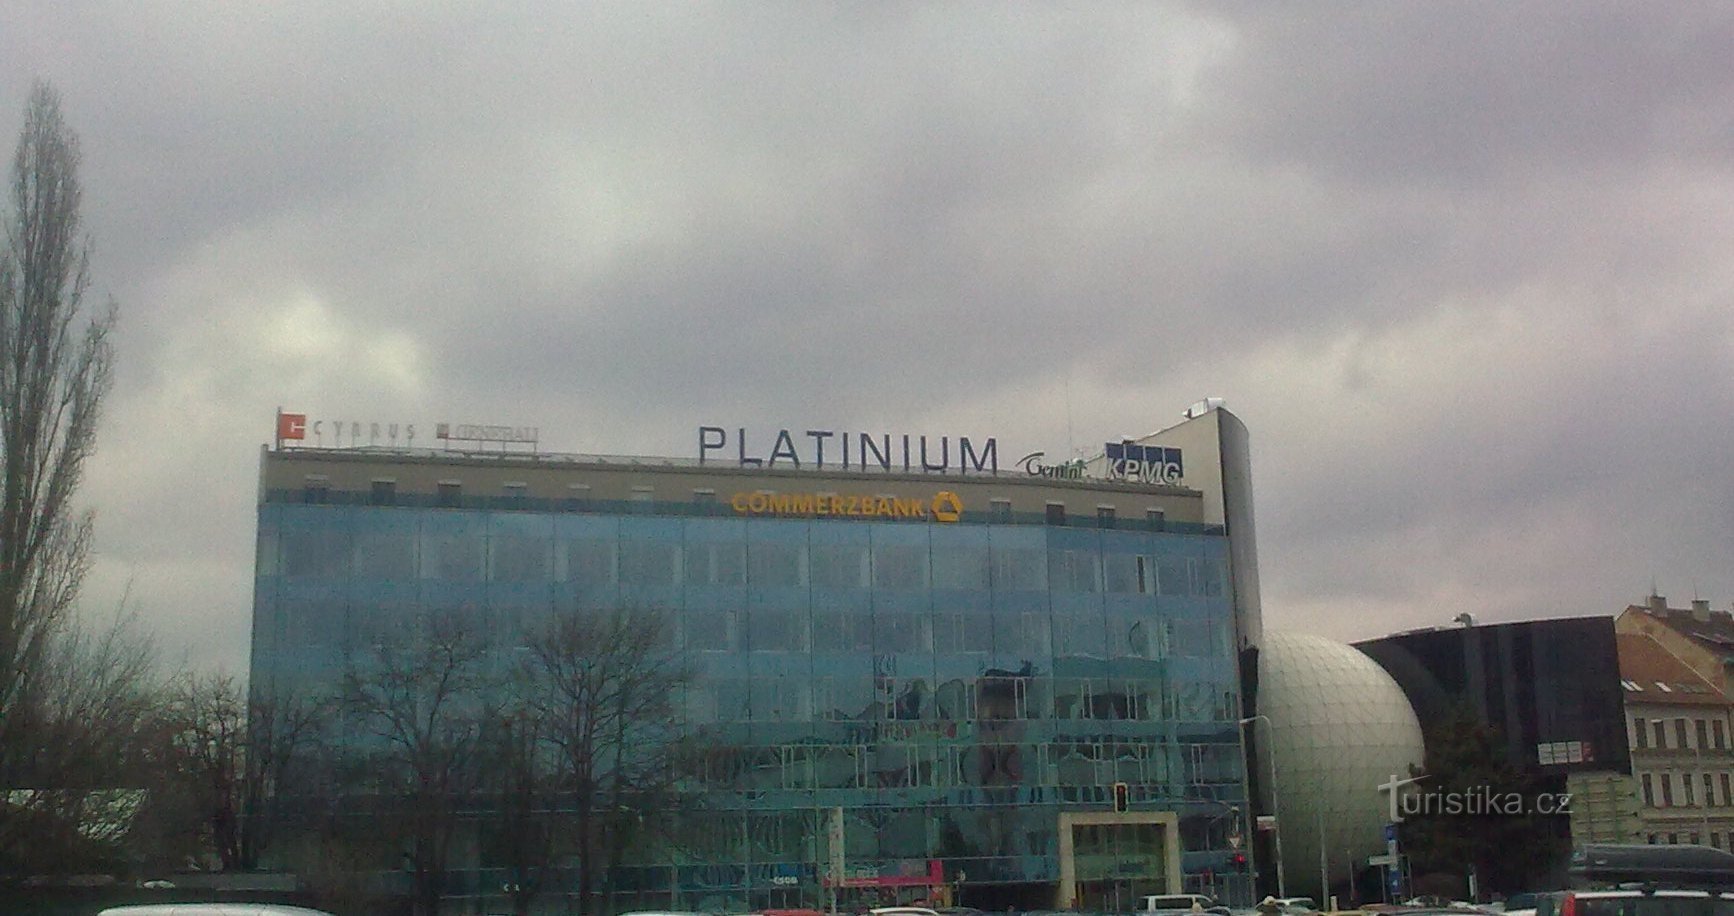 SONO Center with Platinium